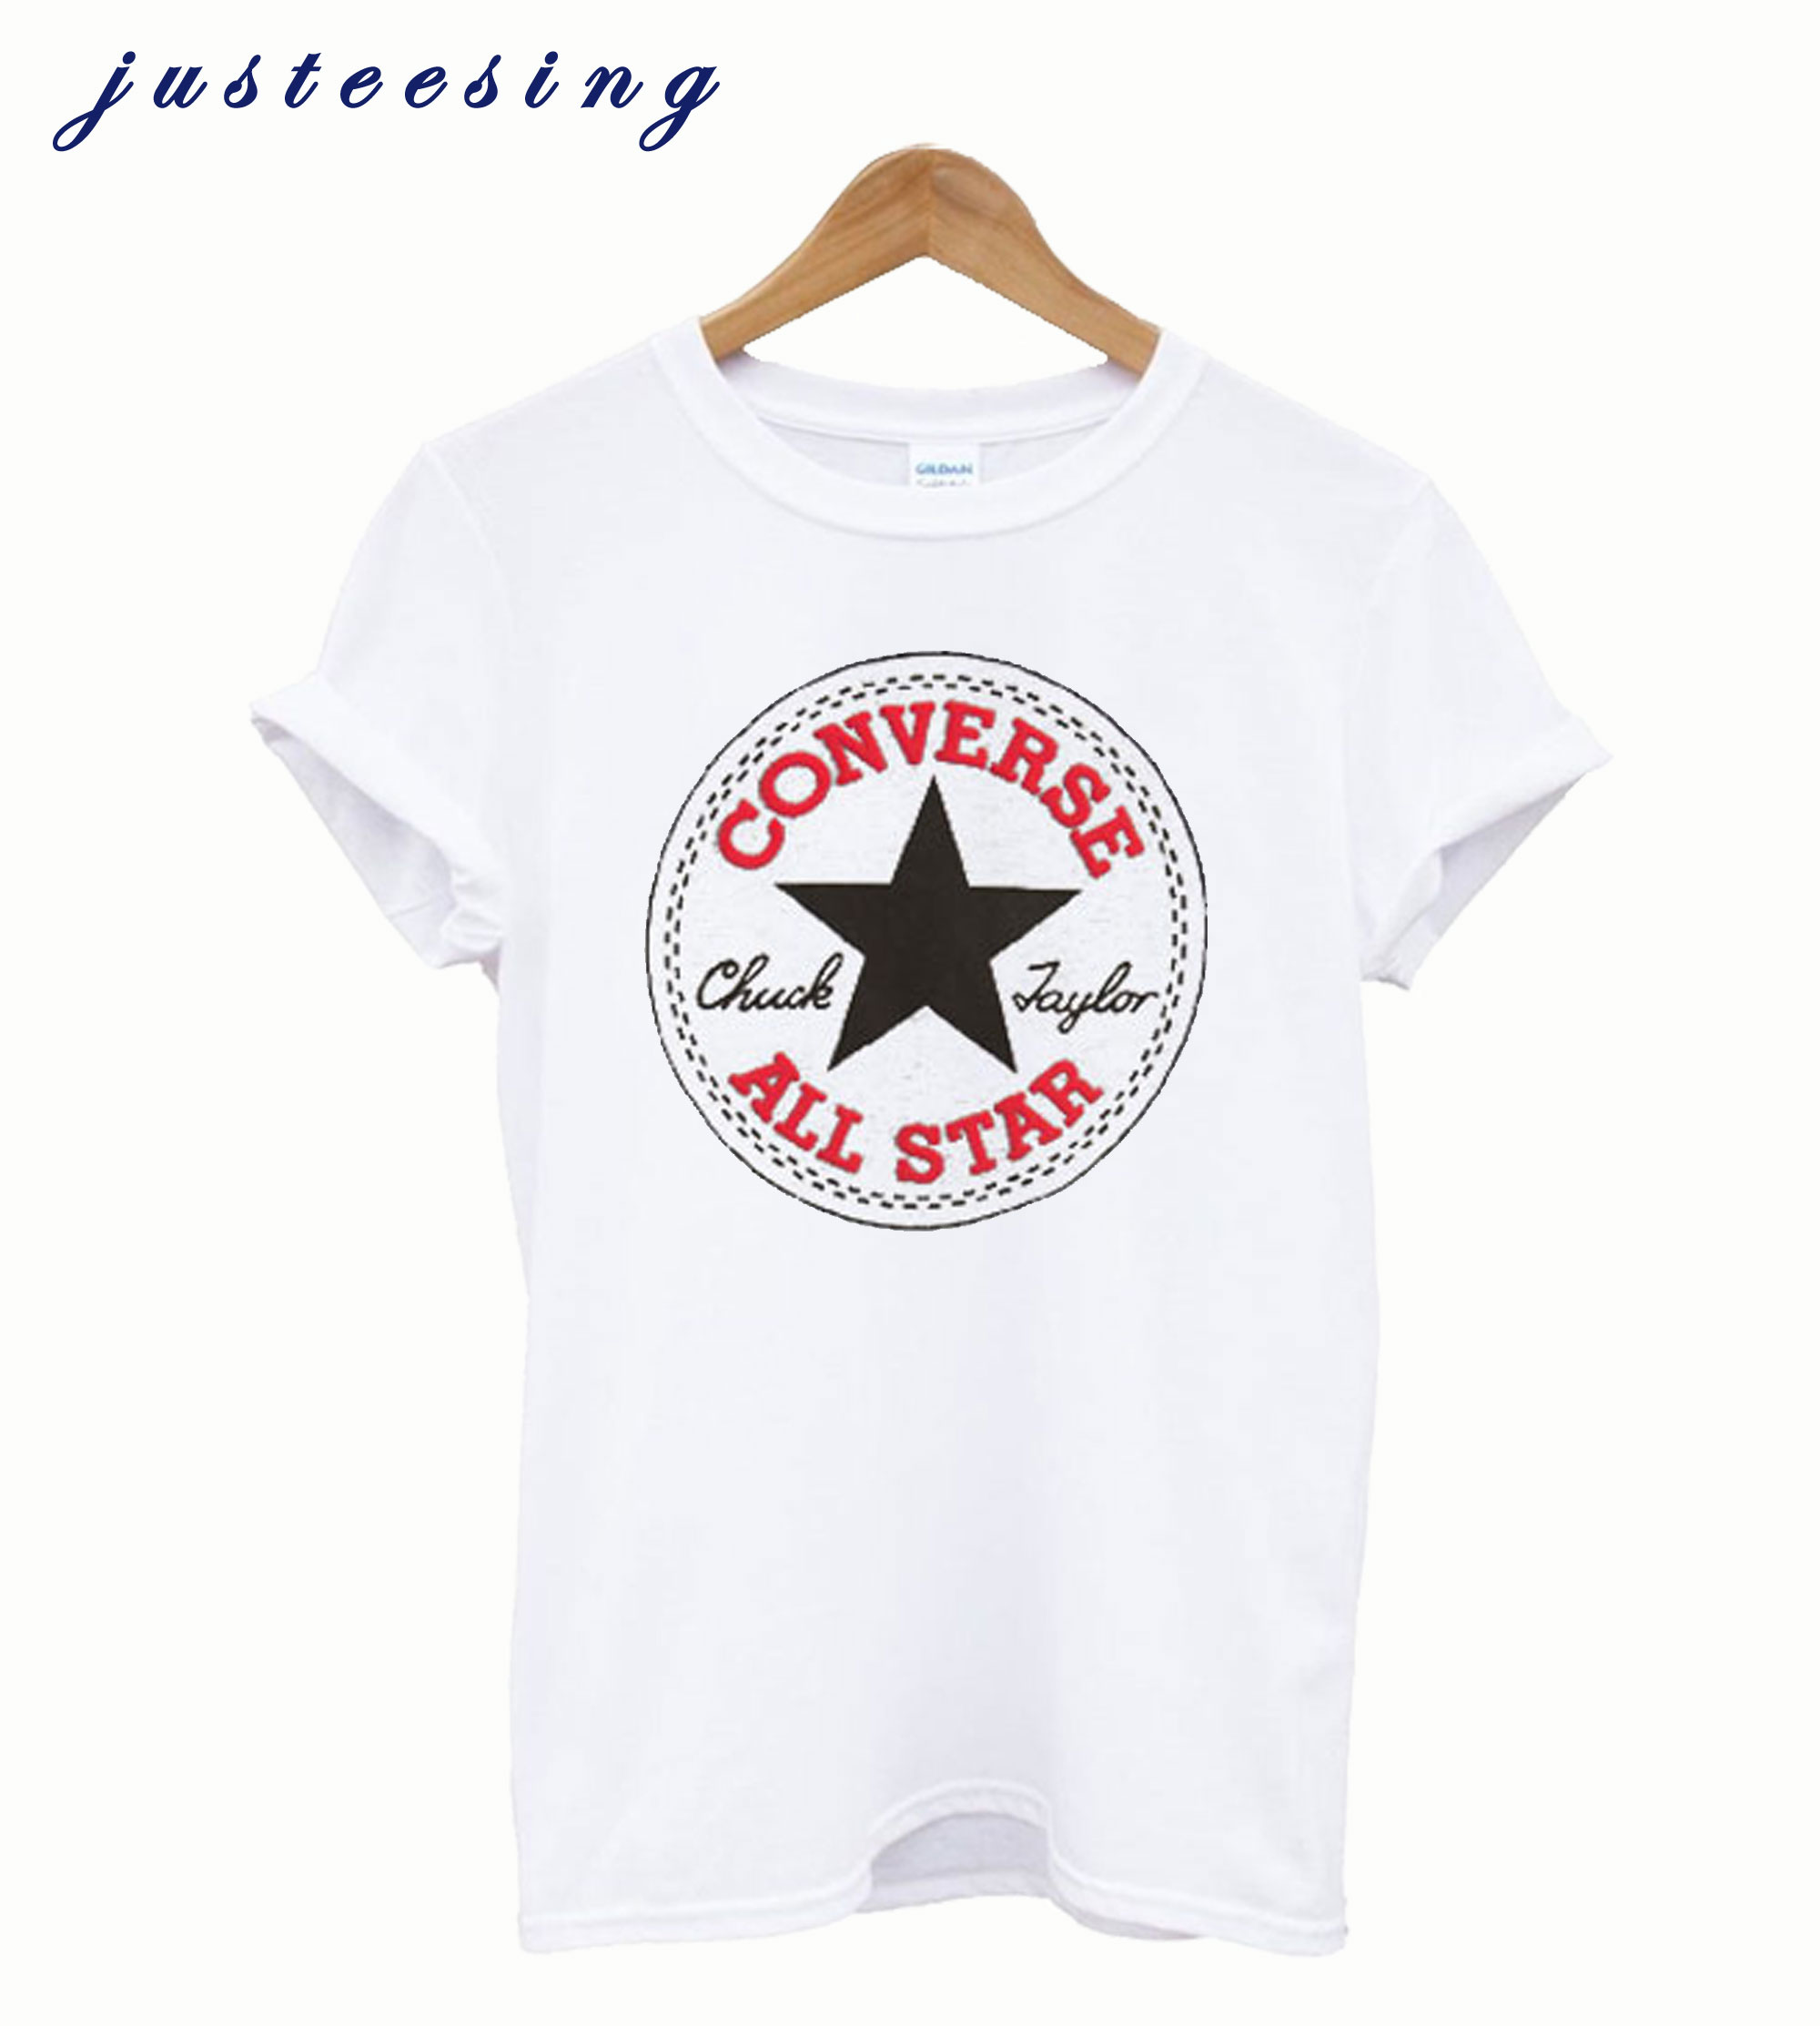 converse all star shirt